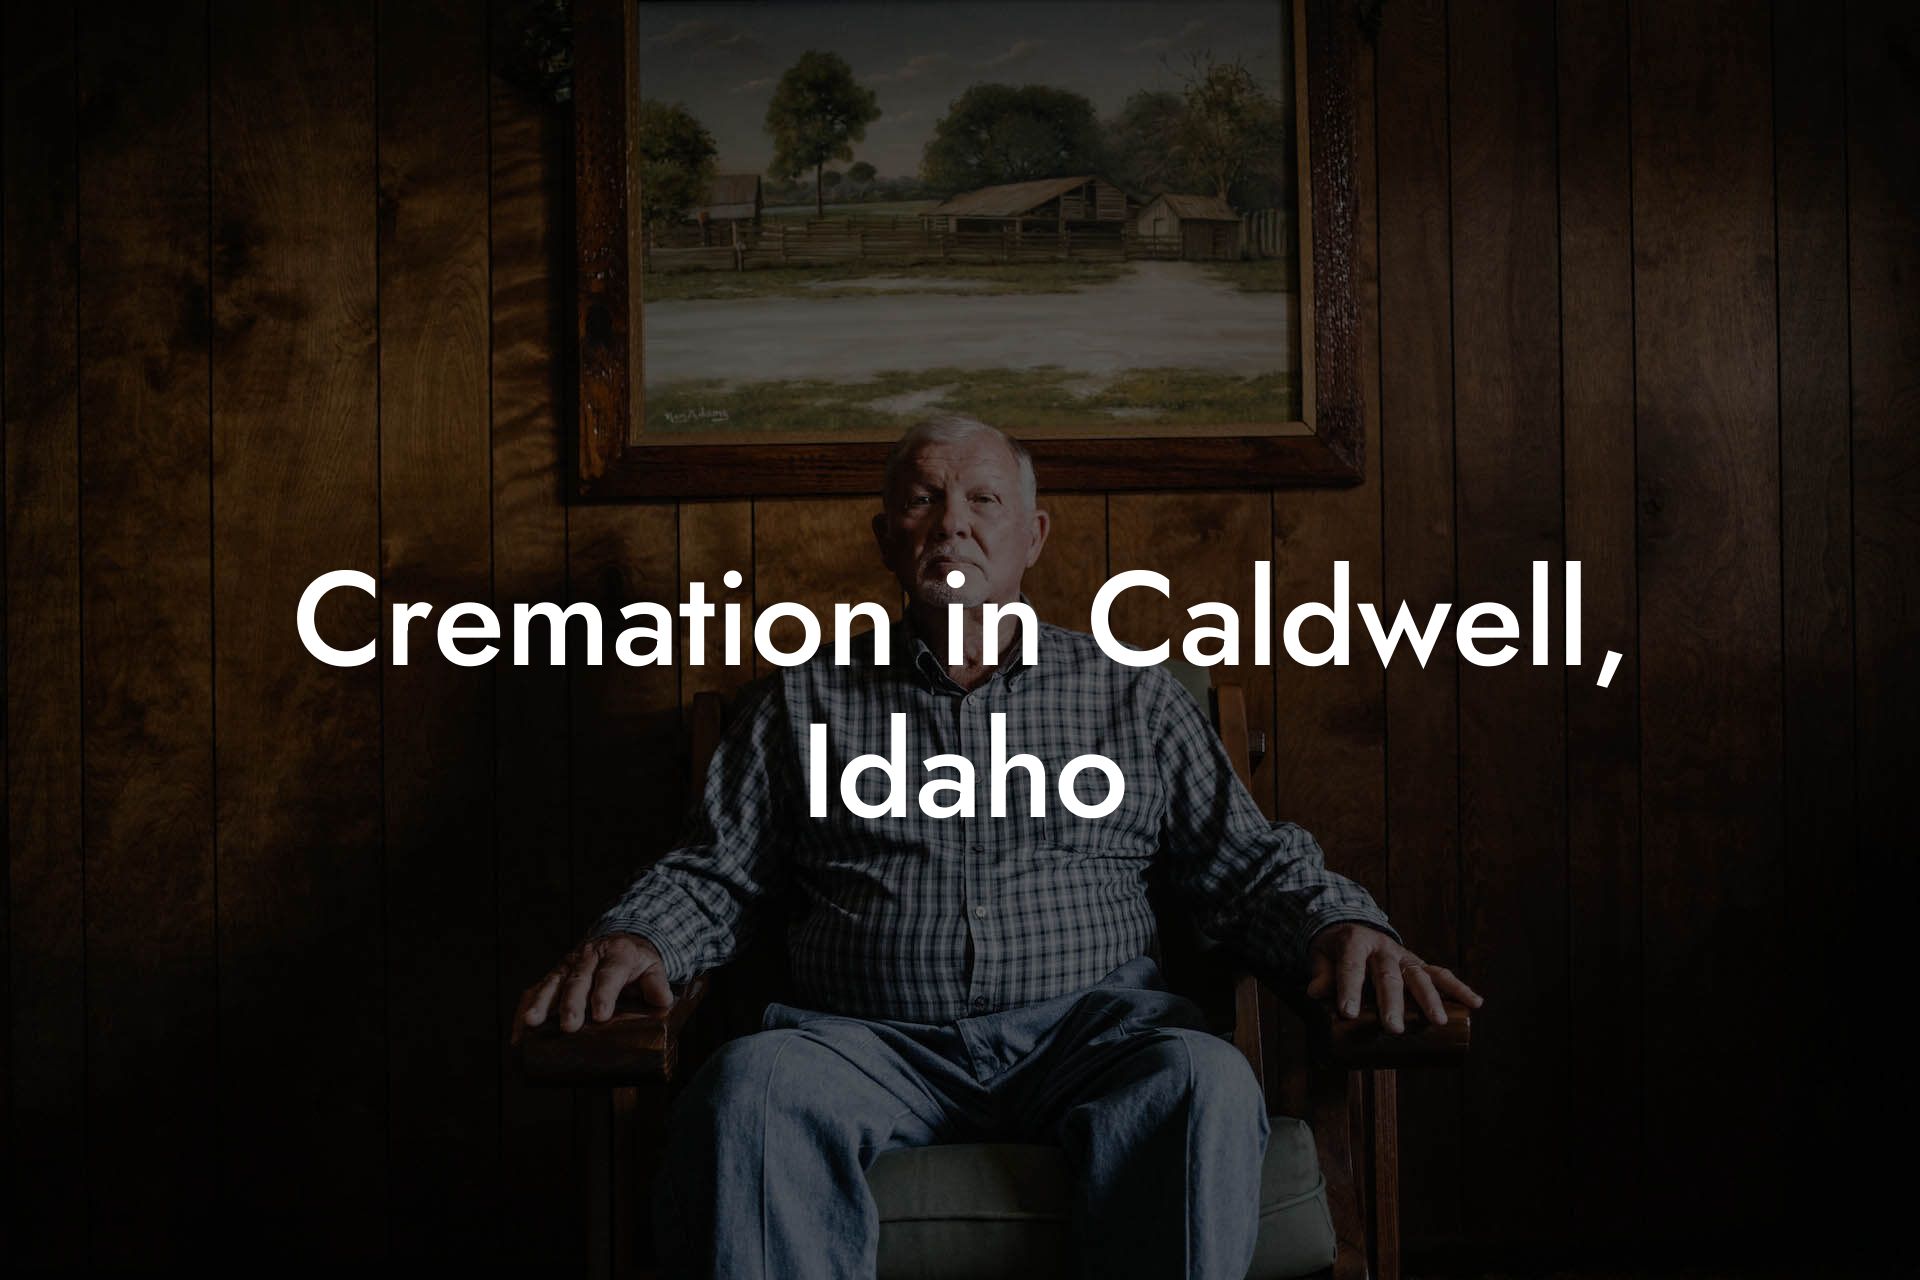 Cremation in Caldwell, Idaho